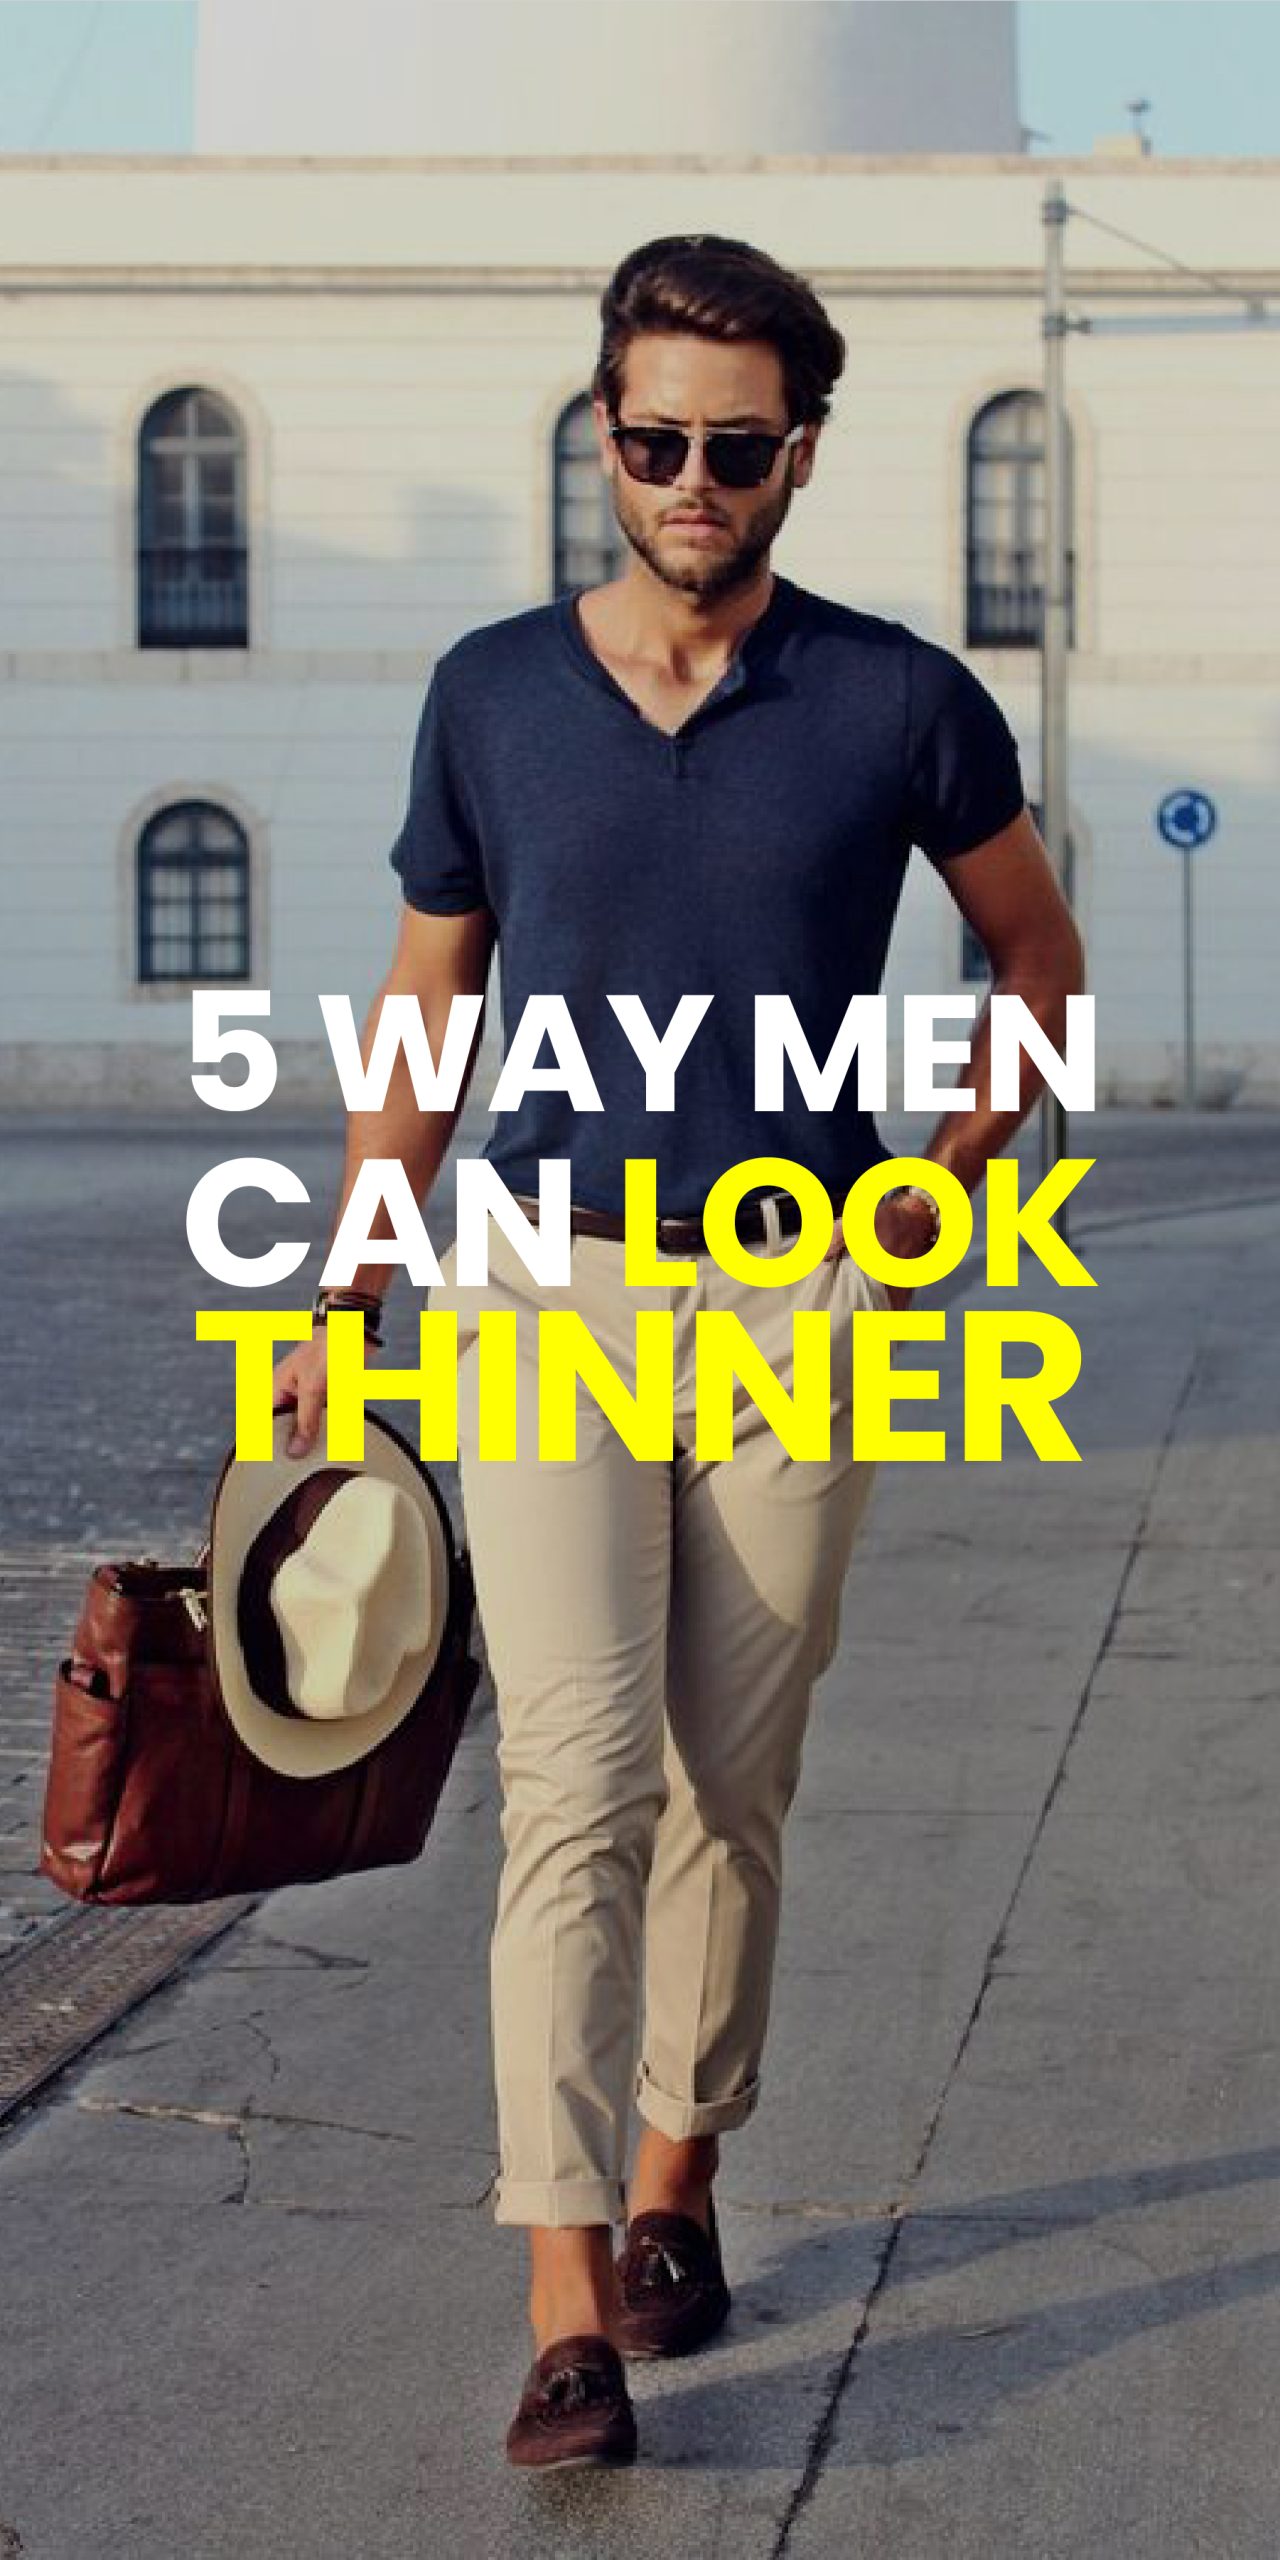 5 WAY MEN CAN LOOK THINNER